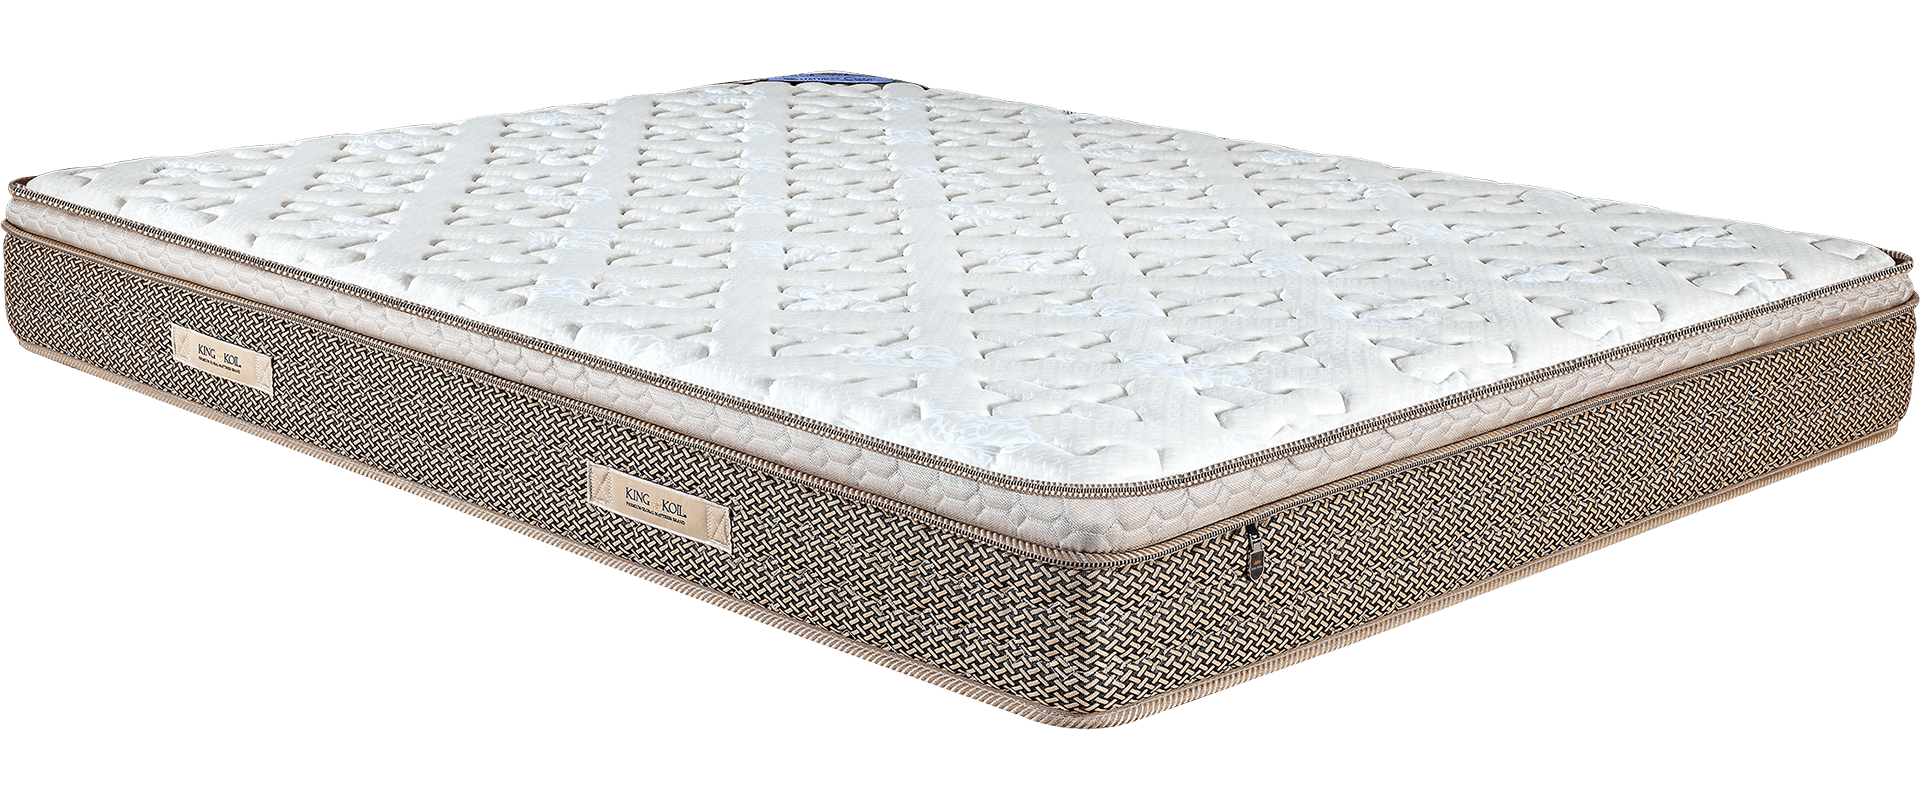 dr ortho mattress 4 inch